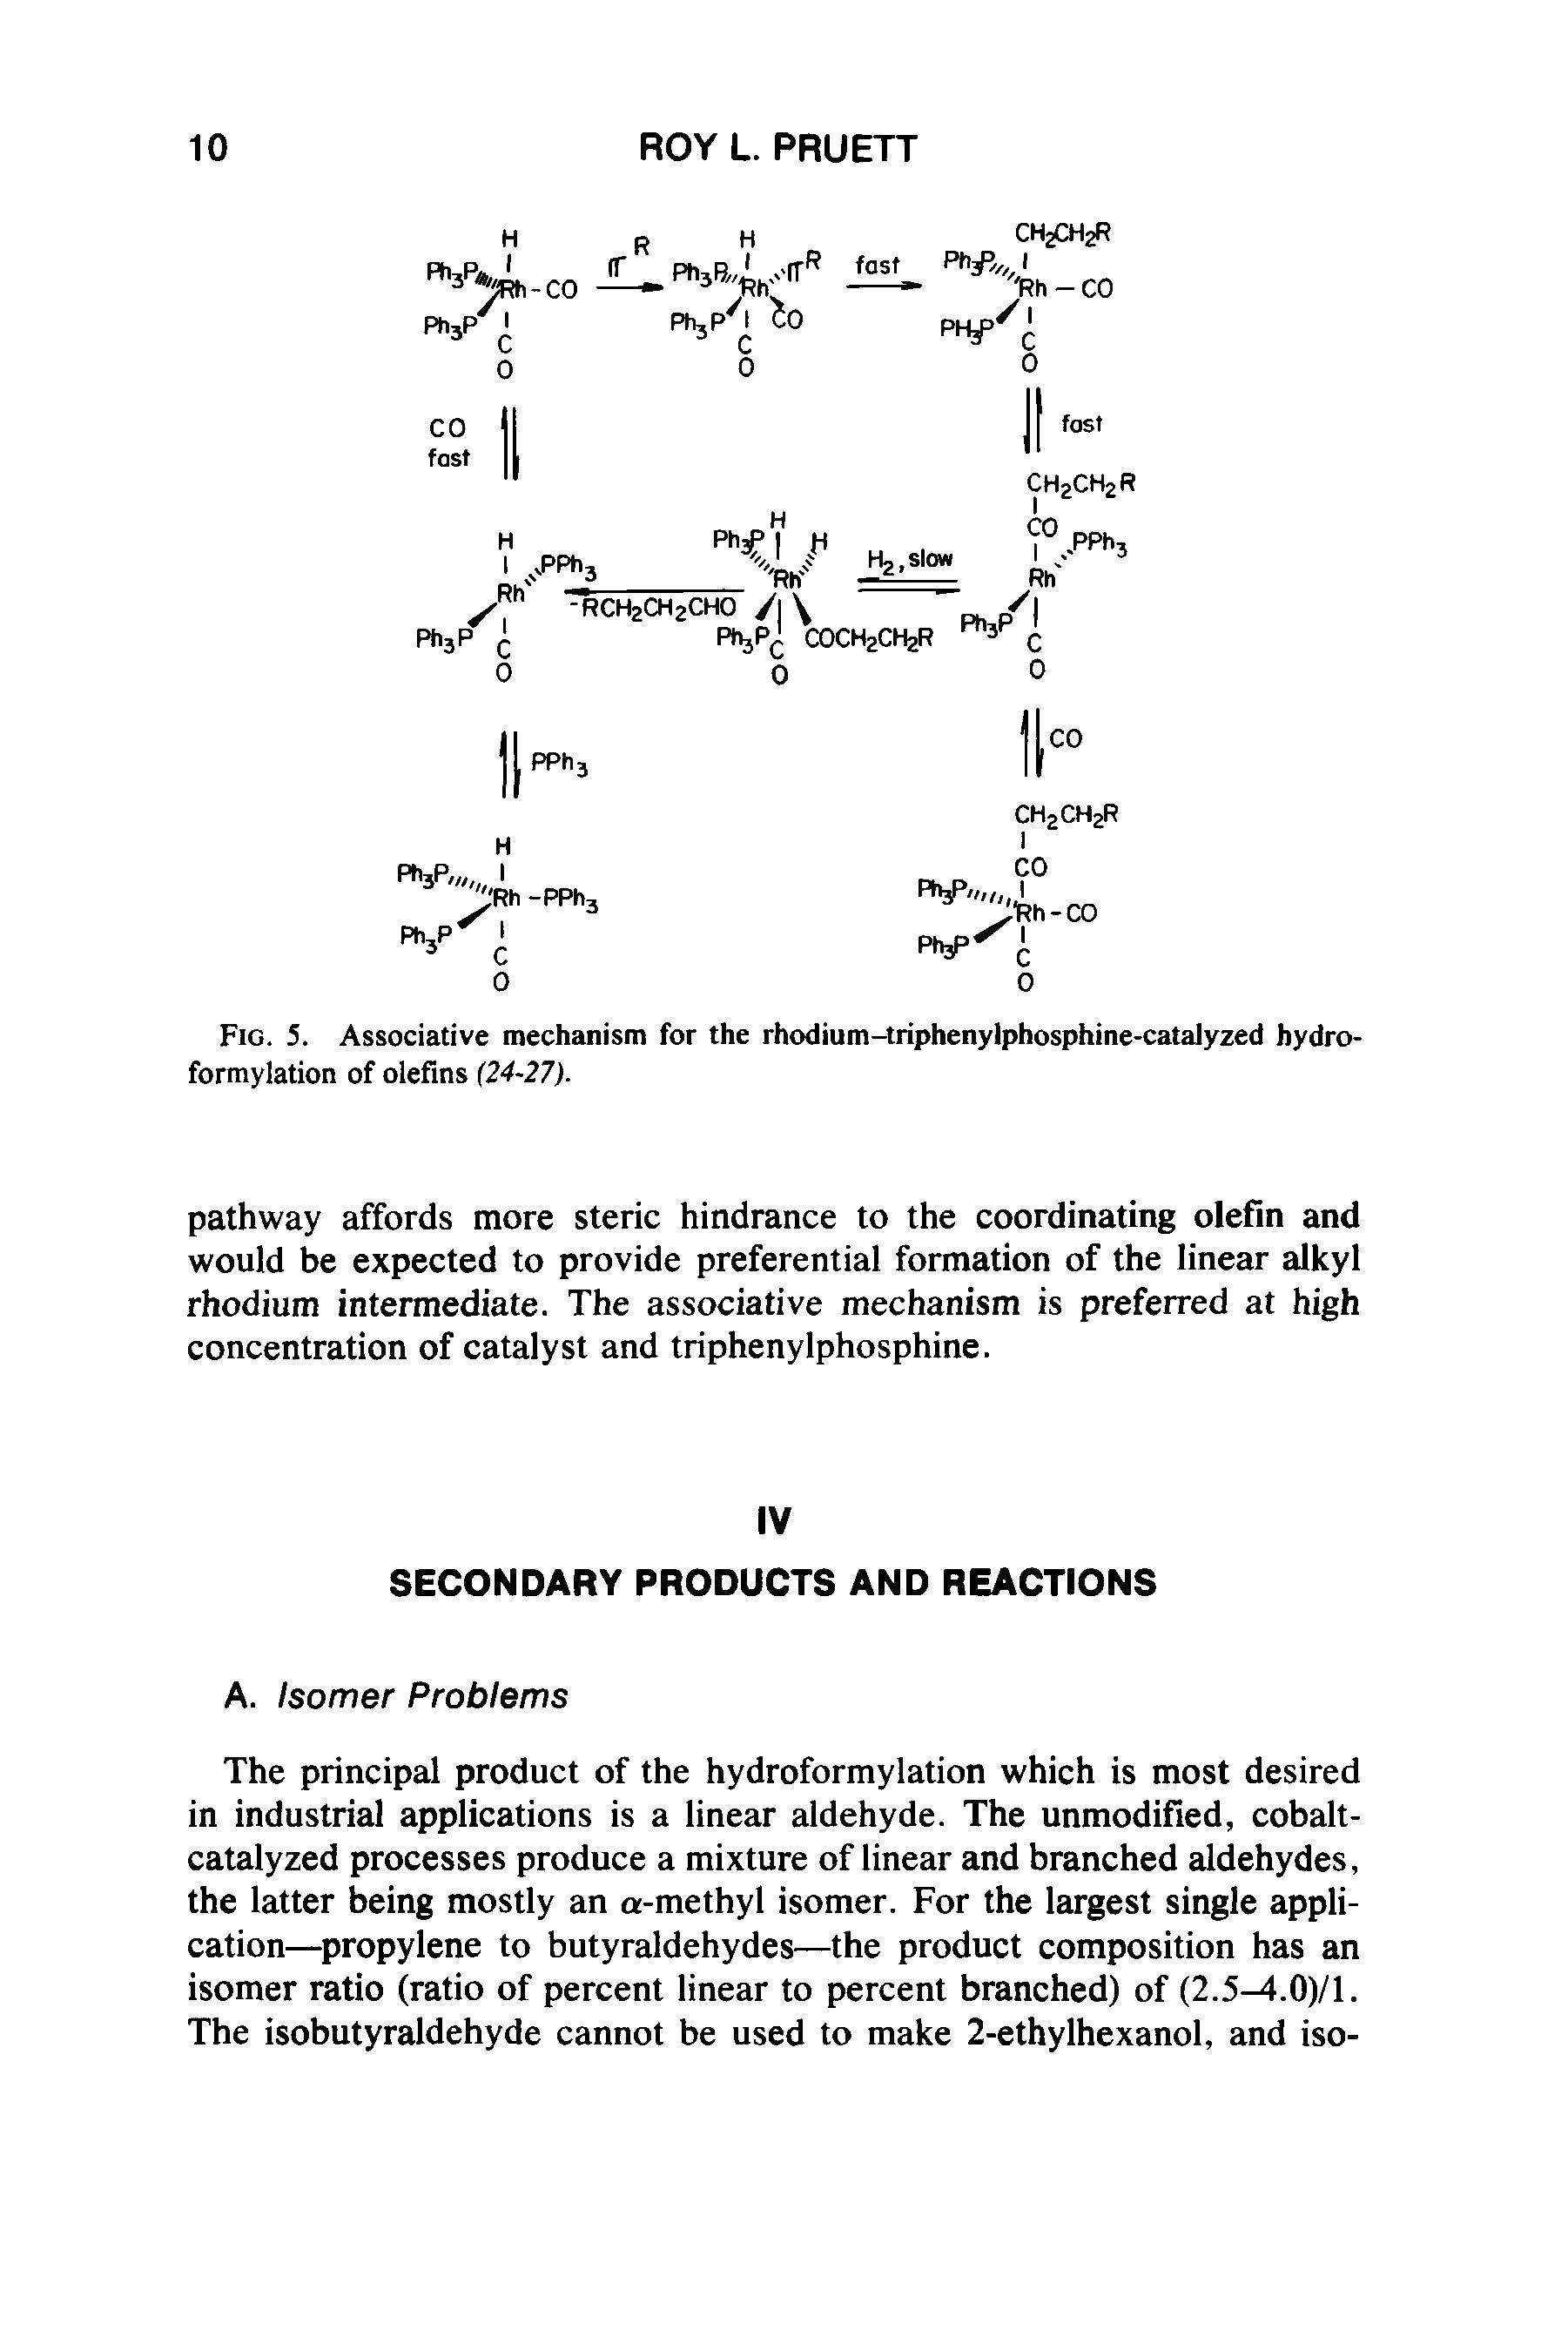 Fig. 5. Associative mechanism for the rhodium-triphenylphosphine-catalyzed hydro-formylation of olefins (24-27).